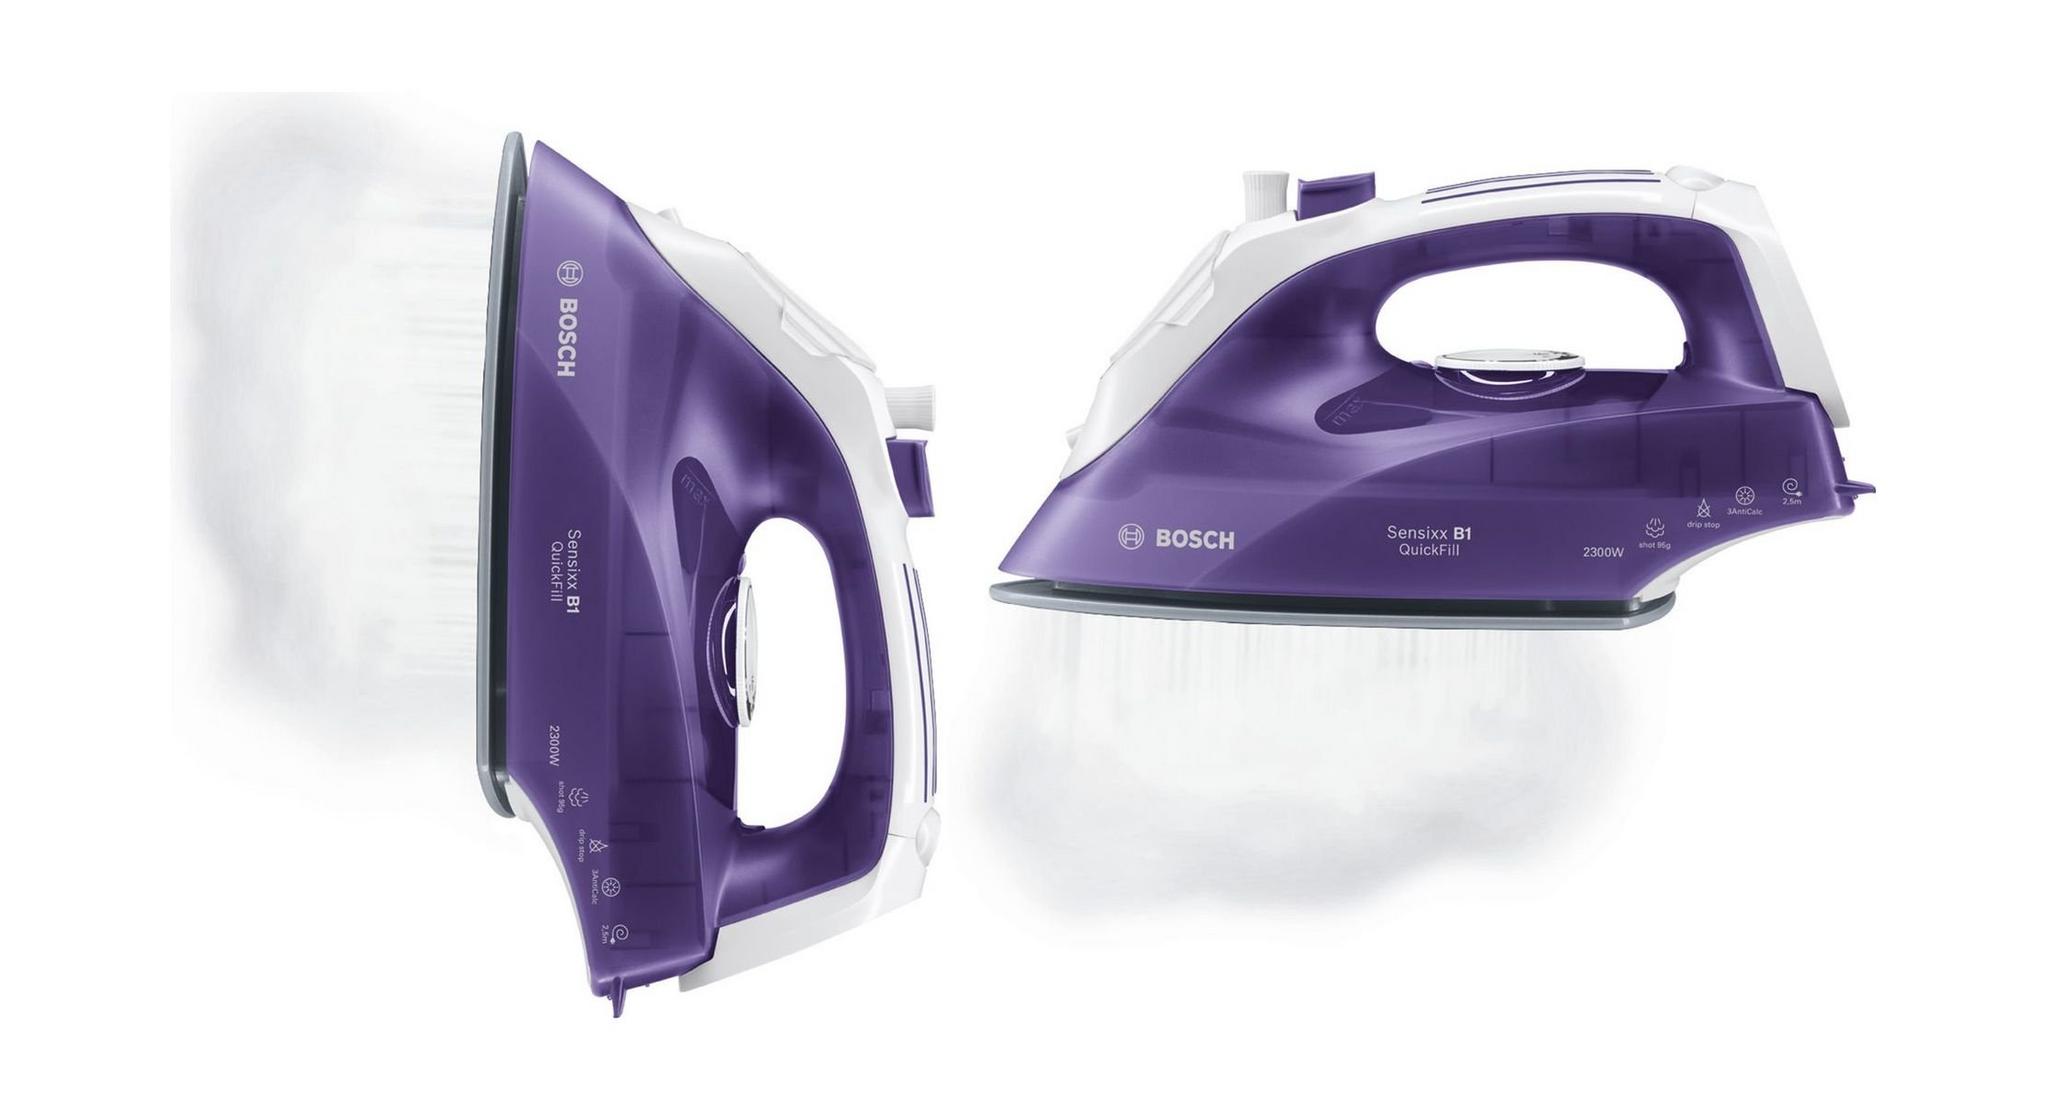 Bosch 2300W 290ML QuickFill Steam Iron (TDA2651GB) – Purple